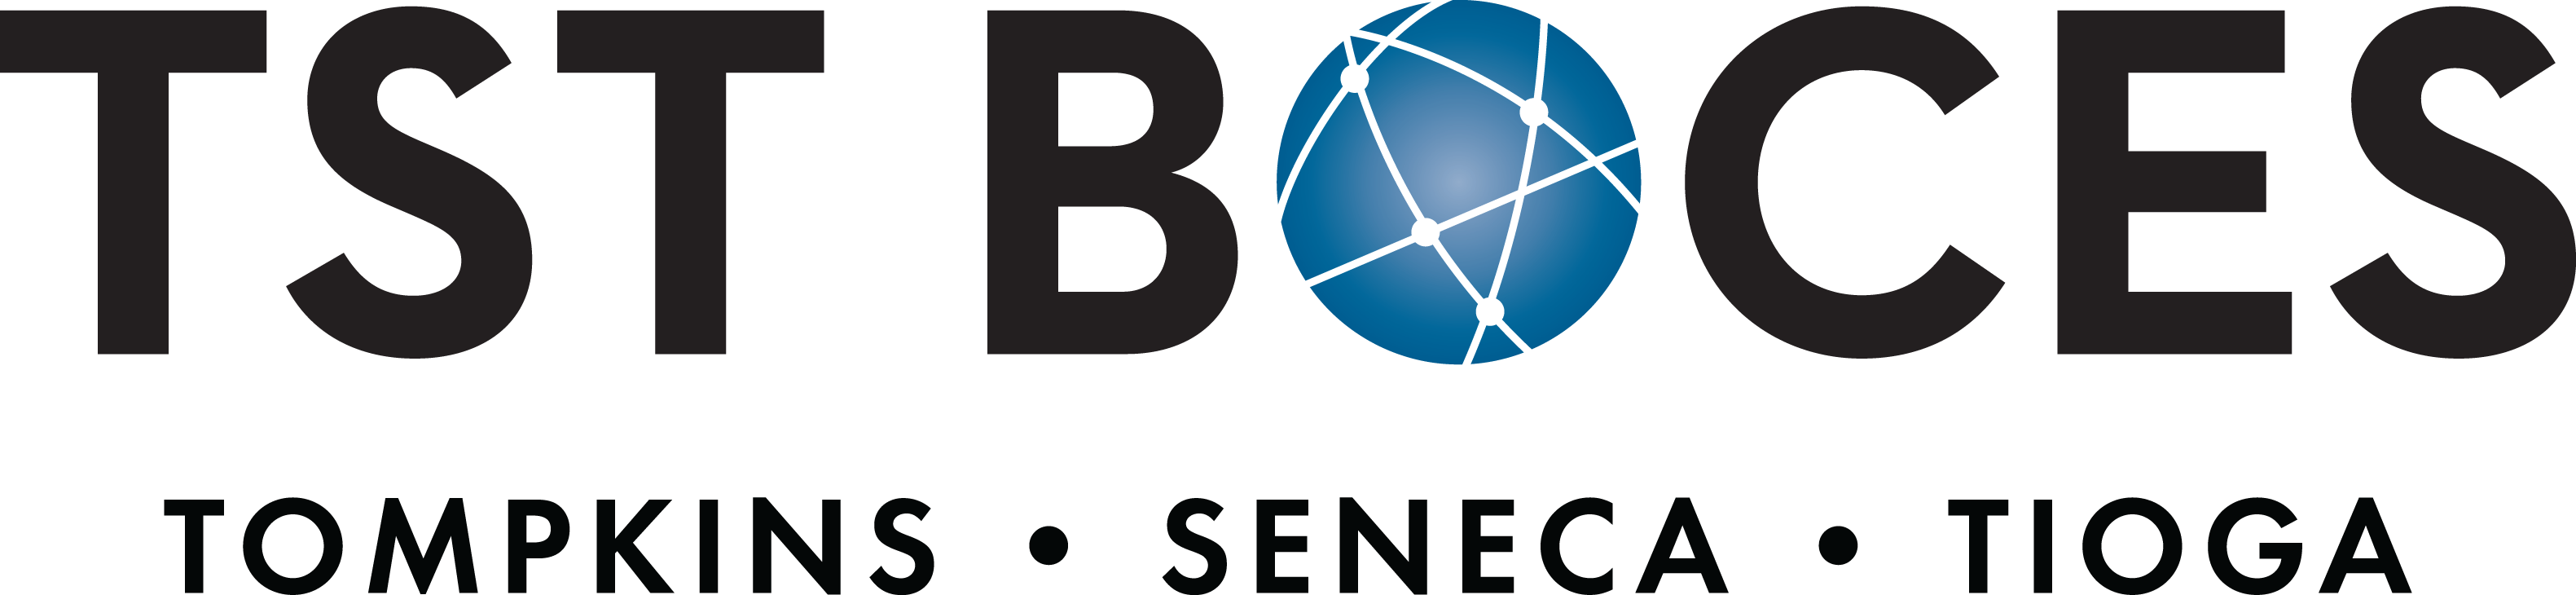 TST BOCES logo